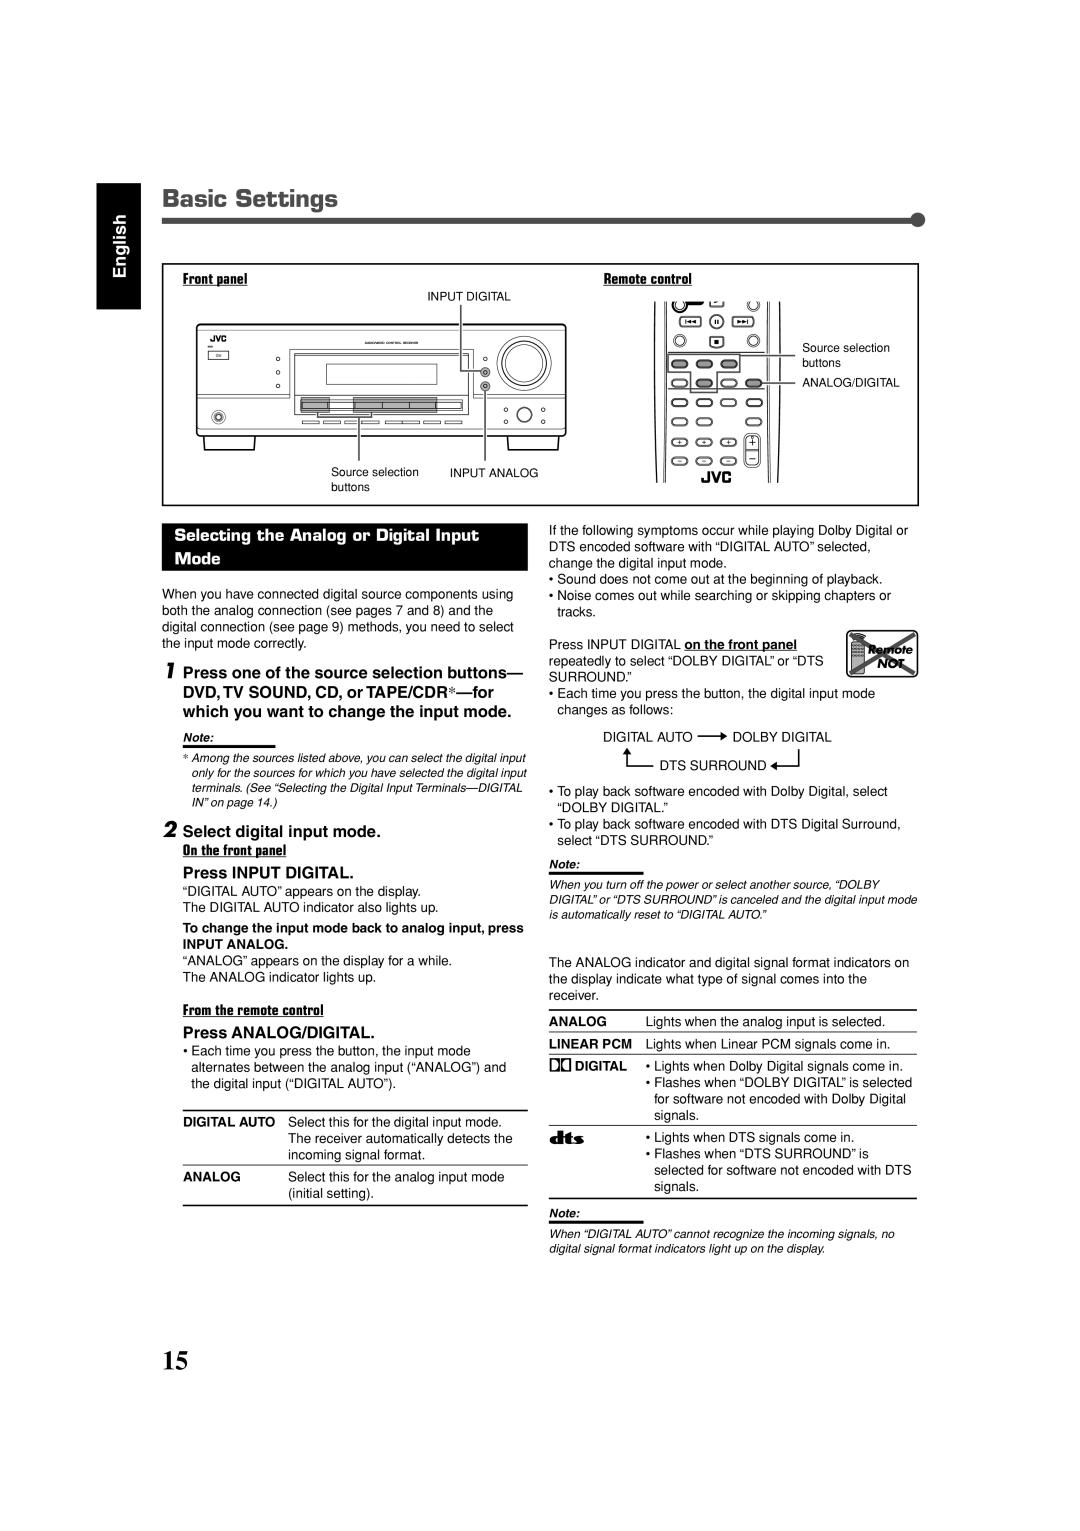 JVC RX-5032VSL manual Basic Settings, English, Selecting the Analog or Digital Input Mode, 2Select digital input mode 